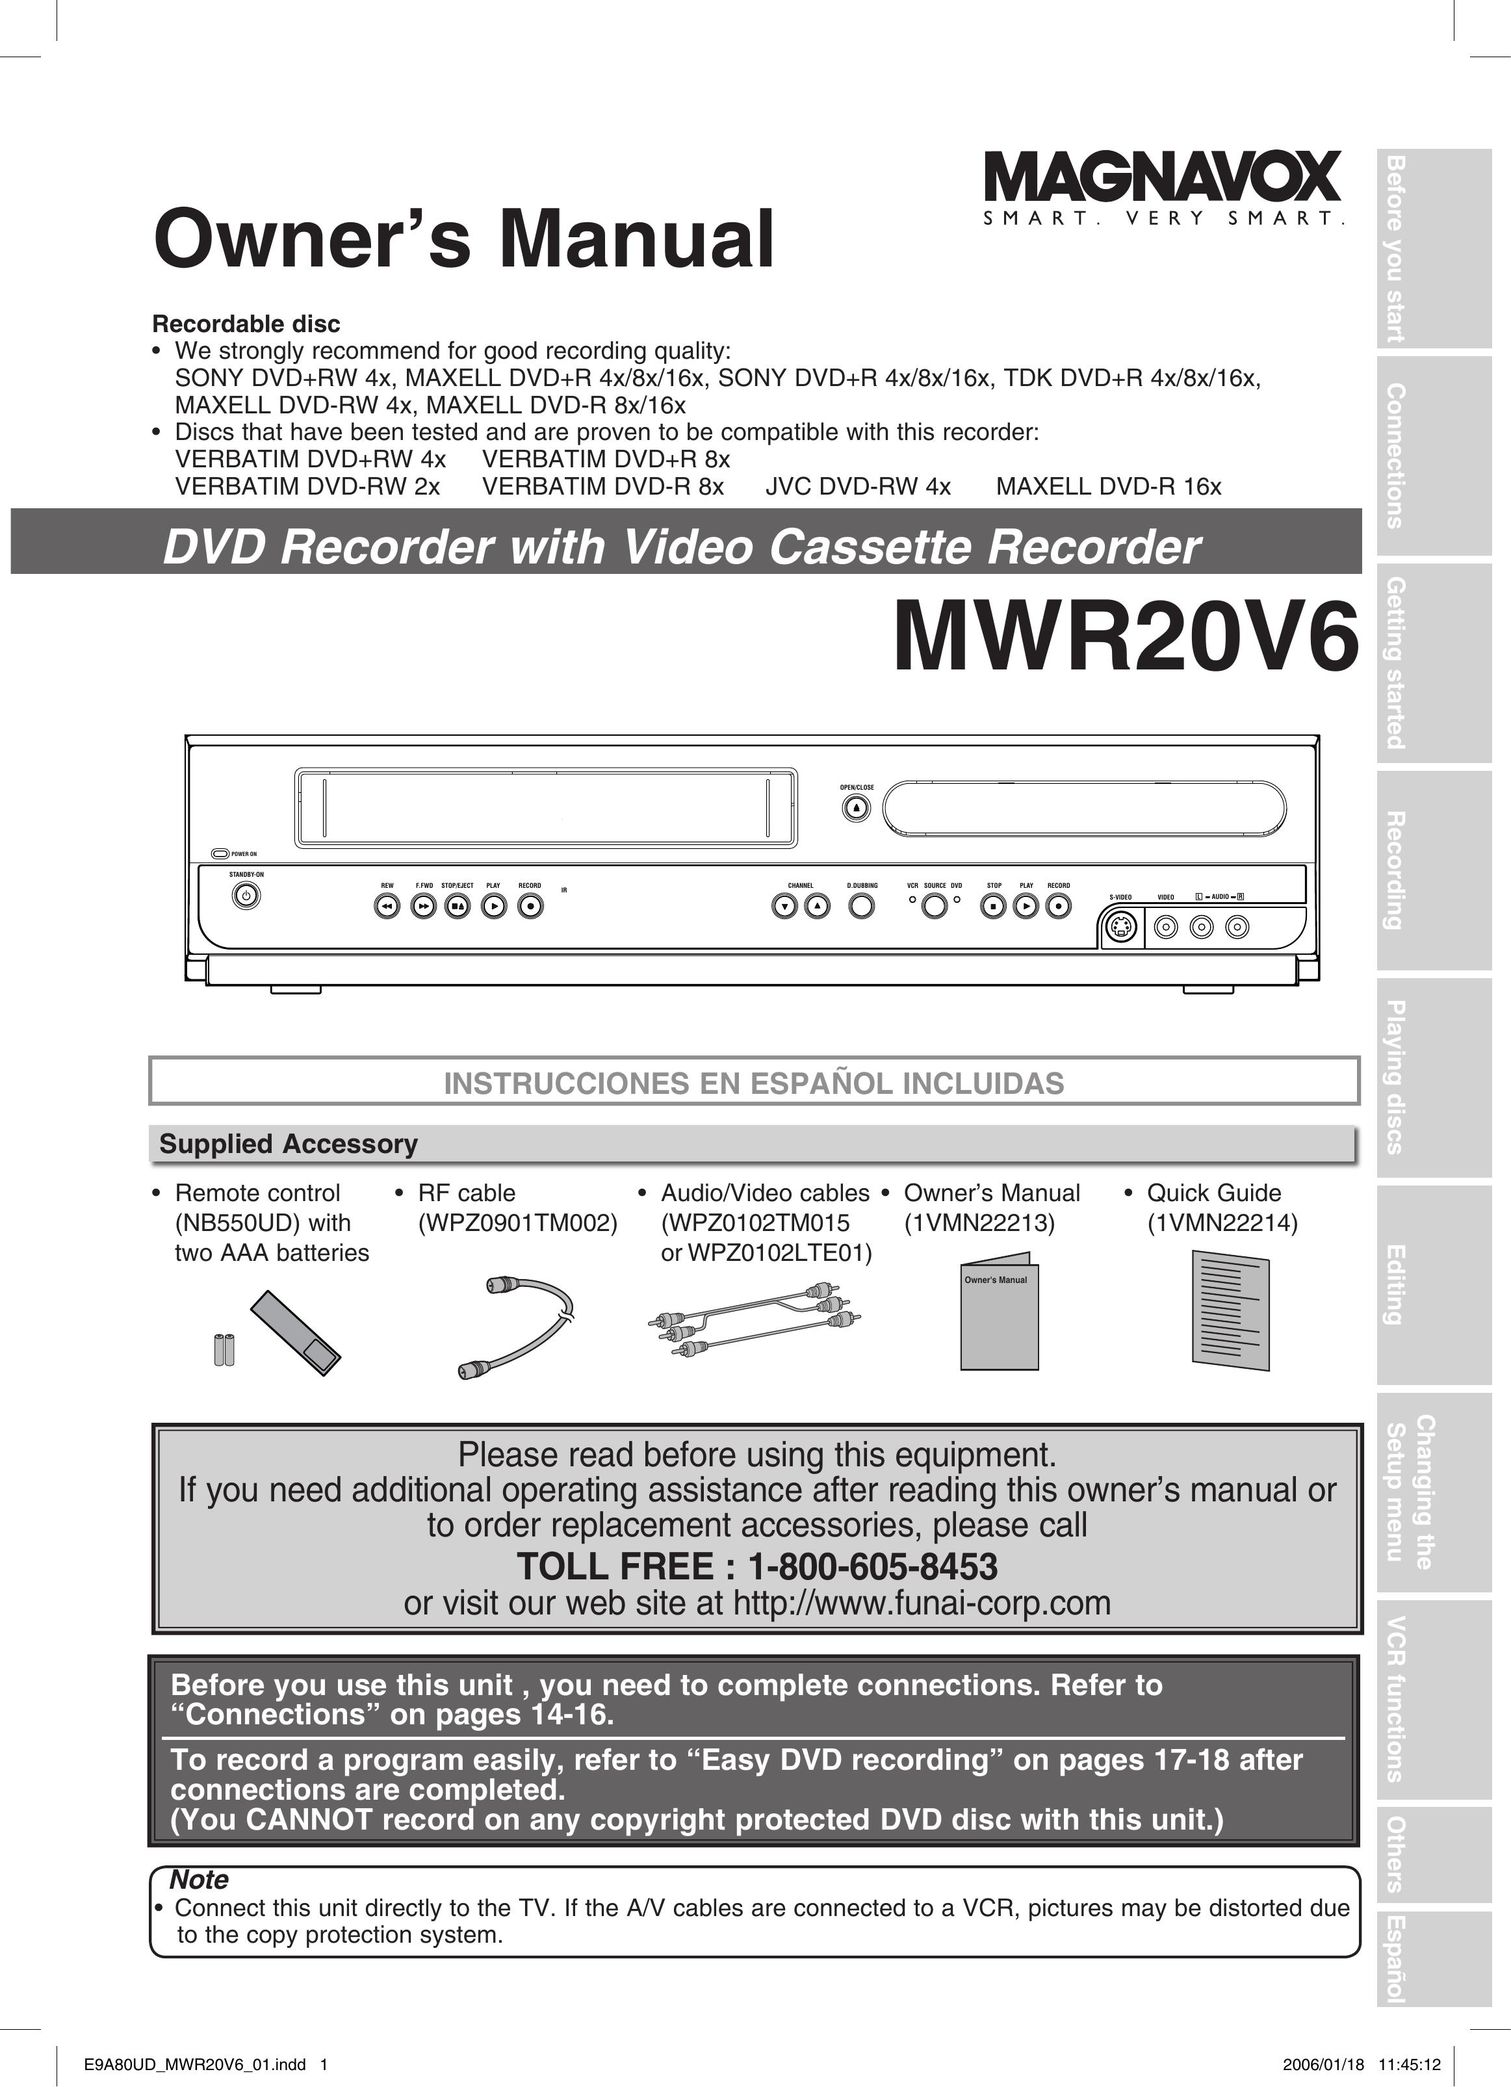 Magnavox MWR20V6 DVD VCR Combo User Manual